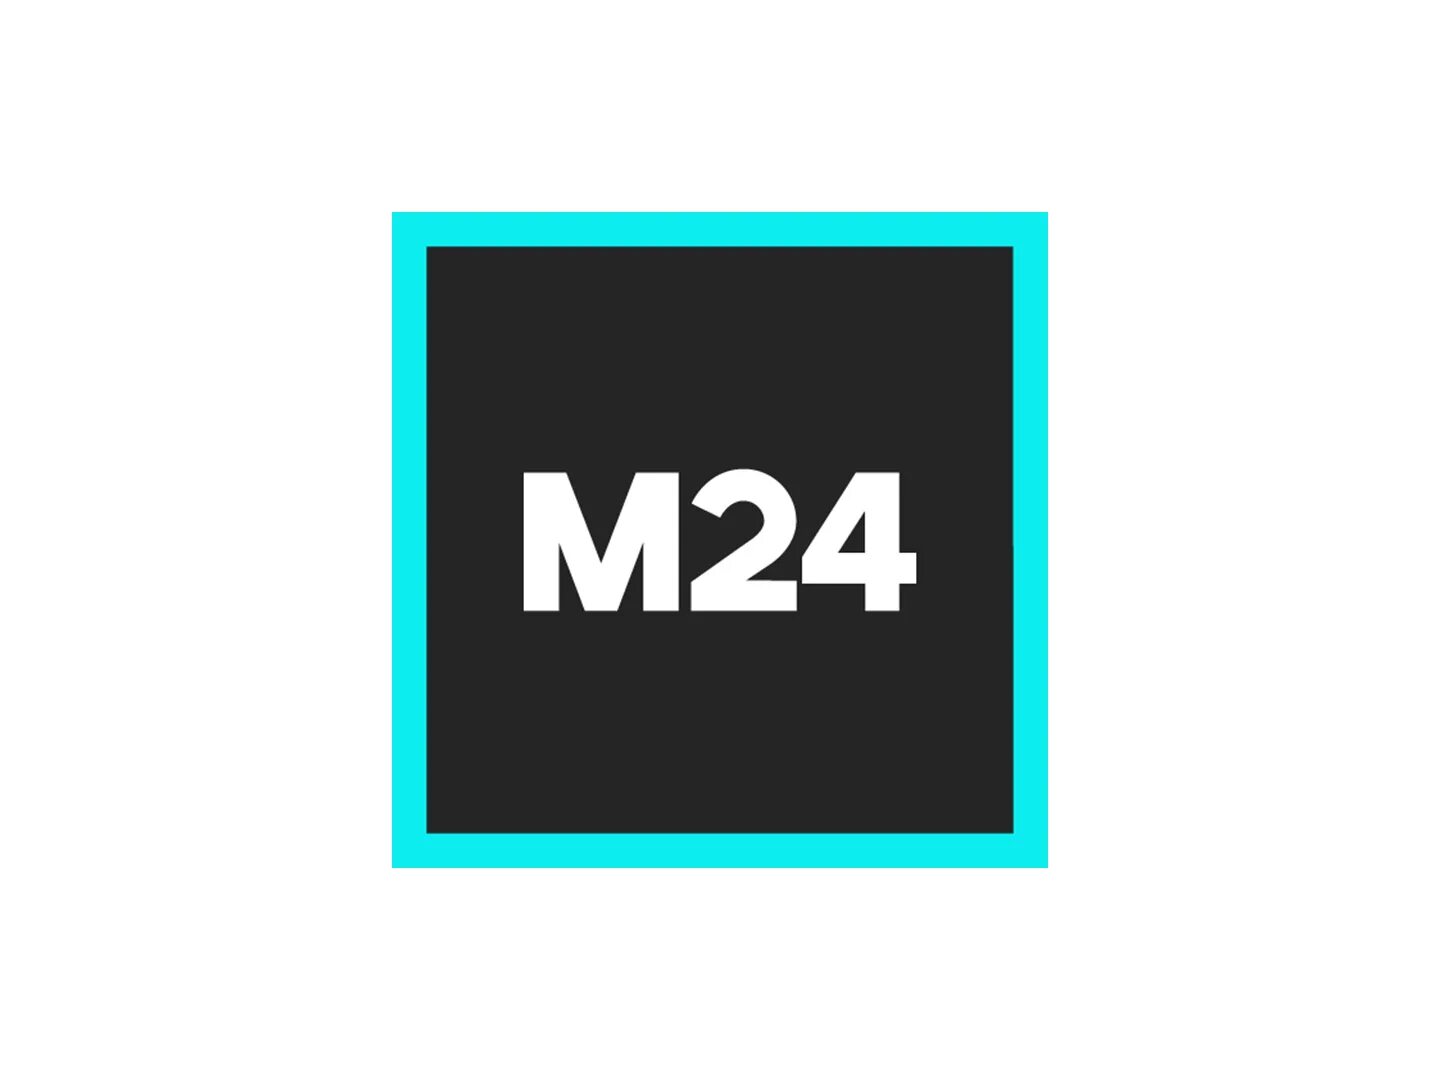 М24 логотип. Телеканал 24. Москва 24. Канал Москва 24. 24 channel